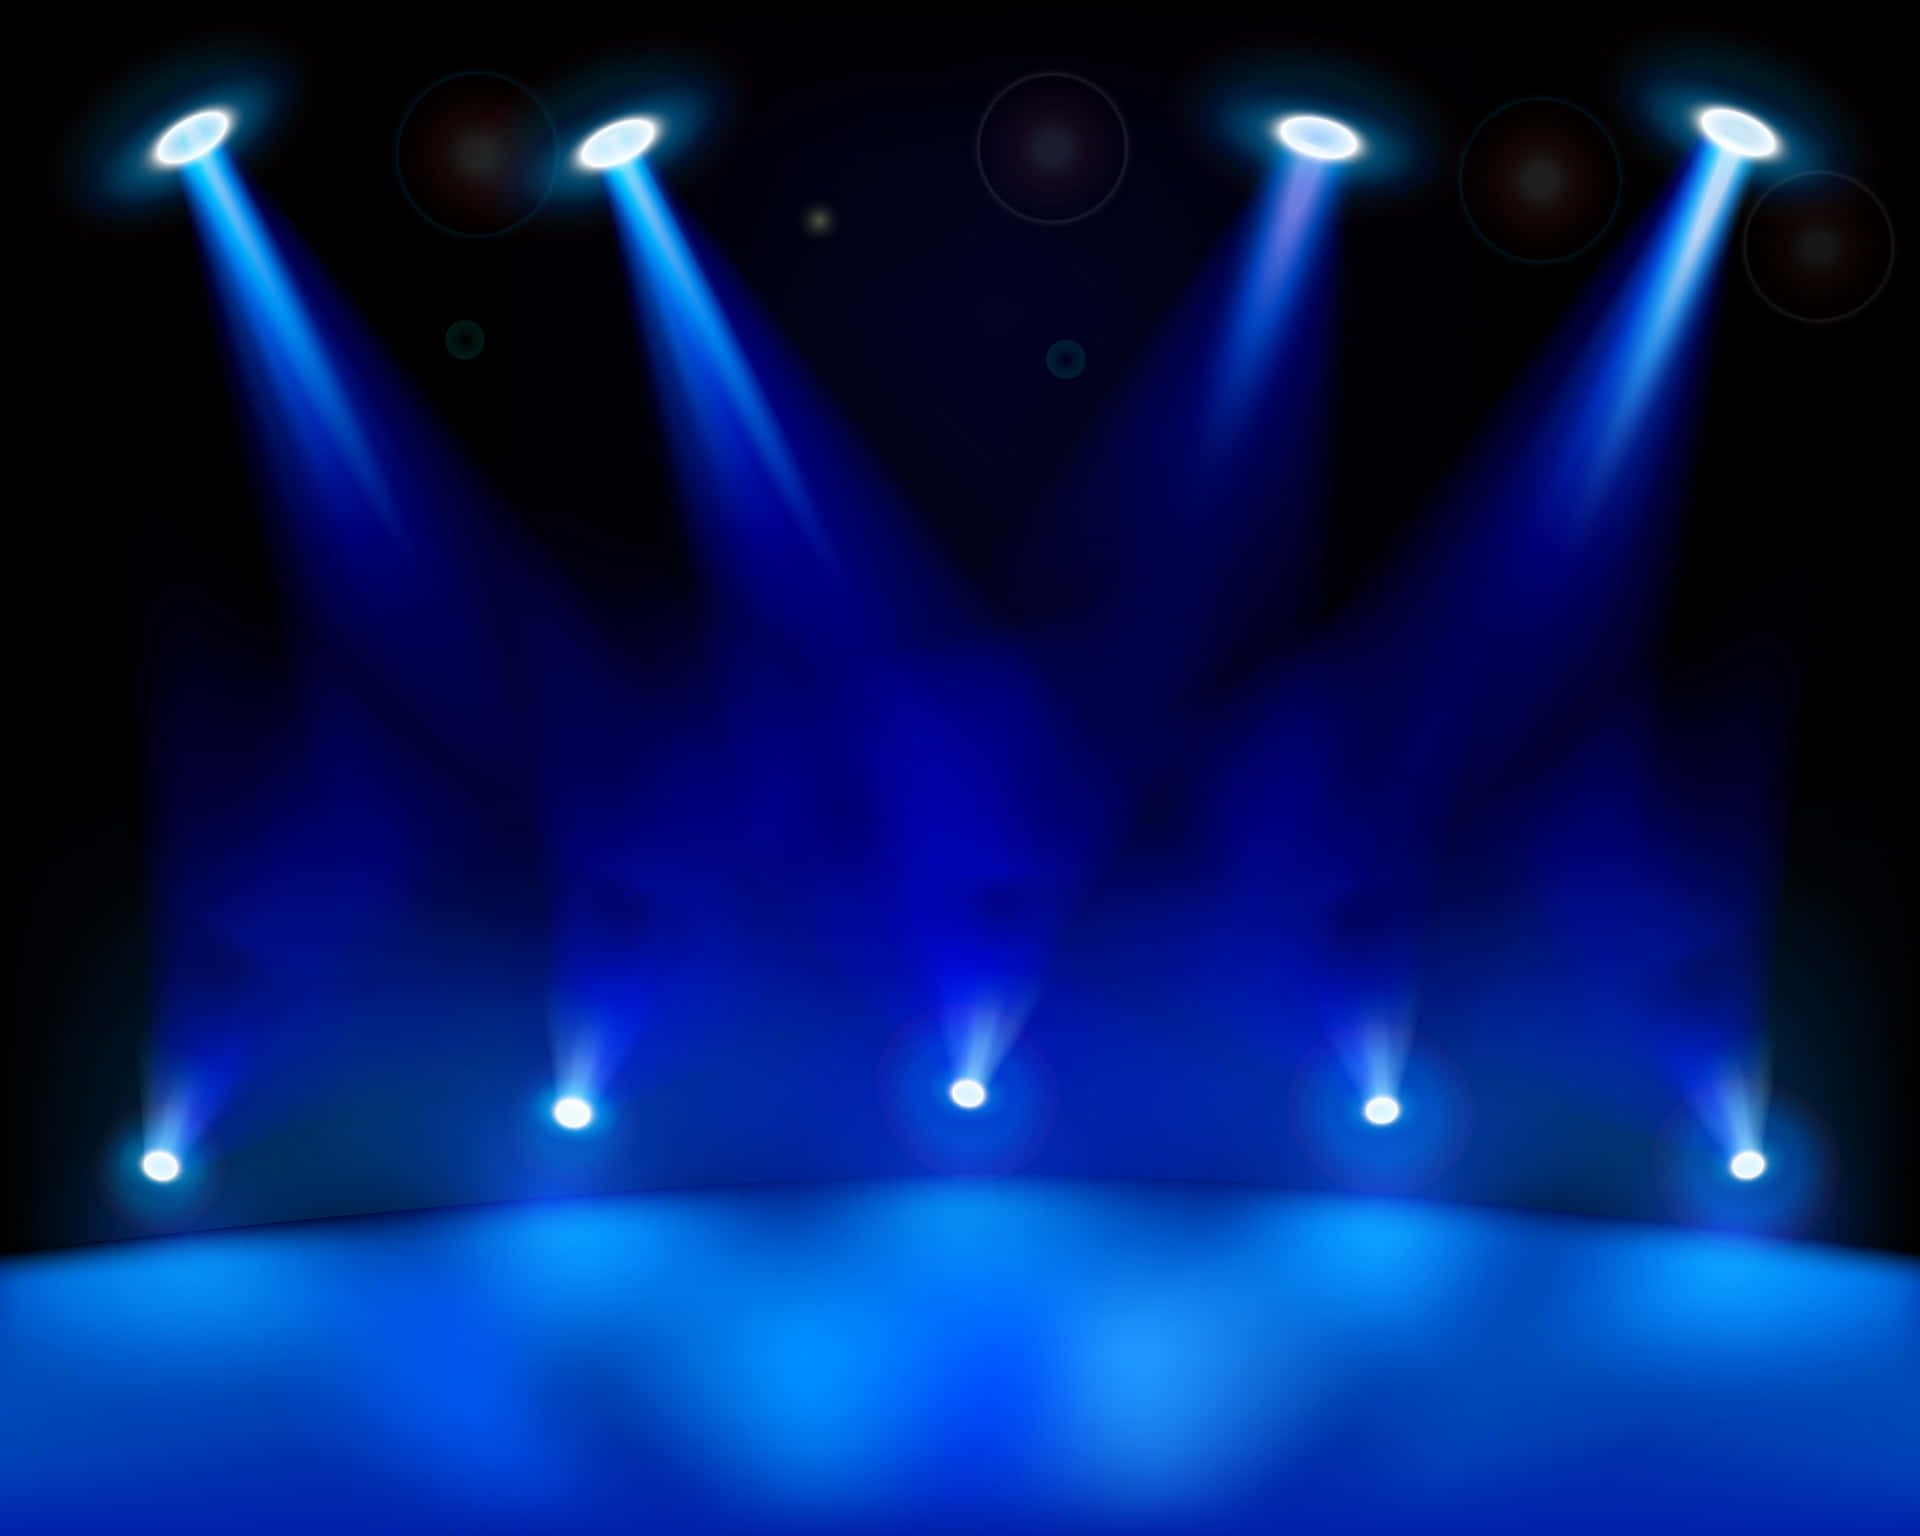 Bright stage lights illuminating a live performance